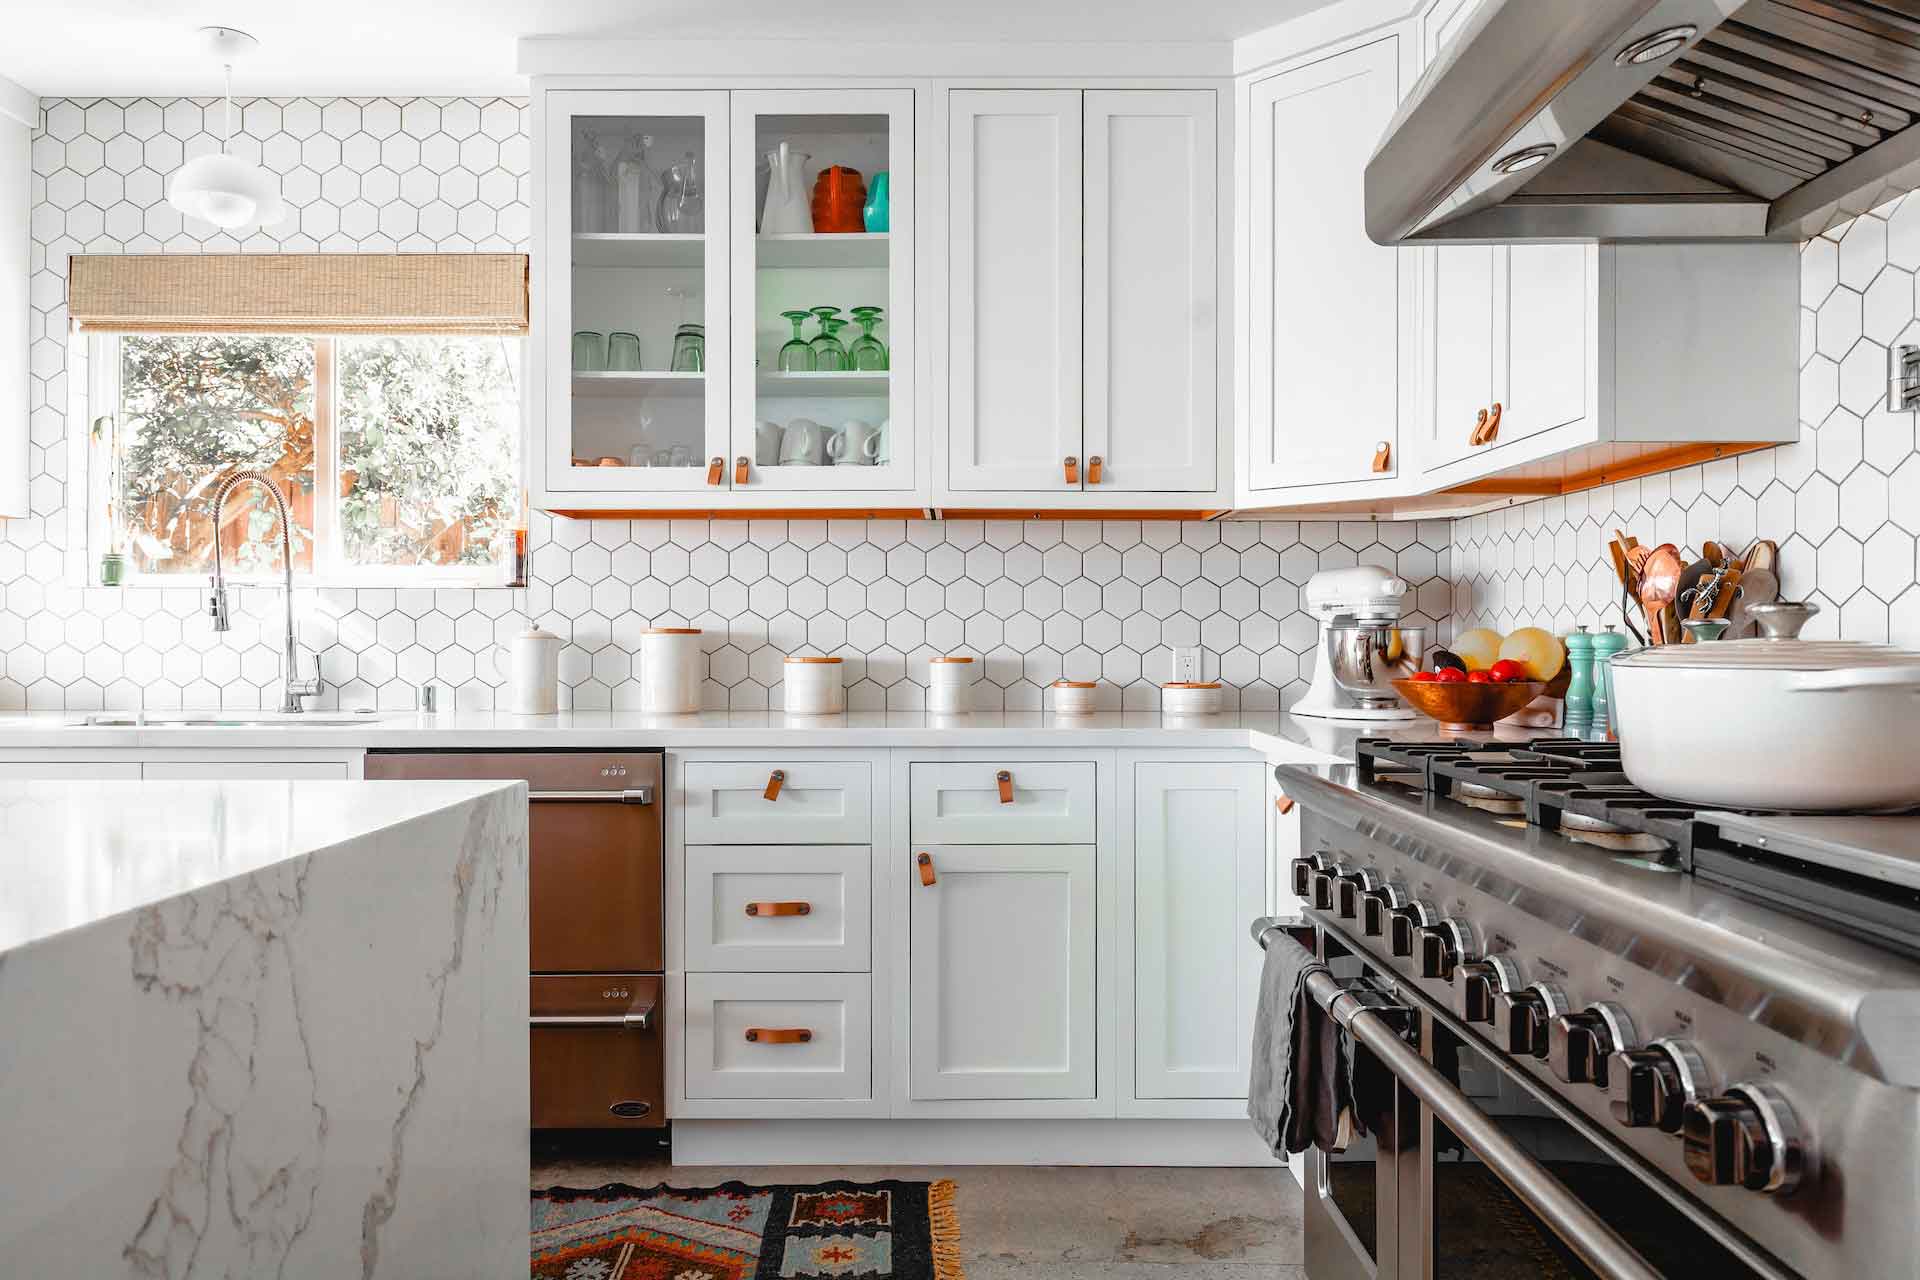 Clean kitchen with granite countertops and hexagonal tile backsplash